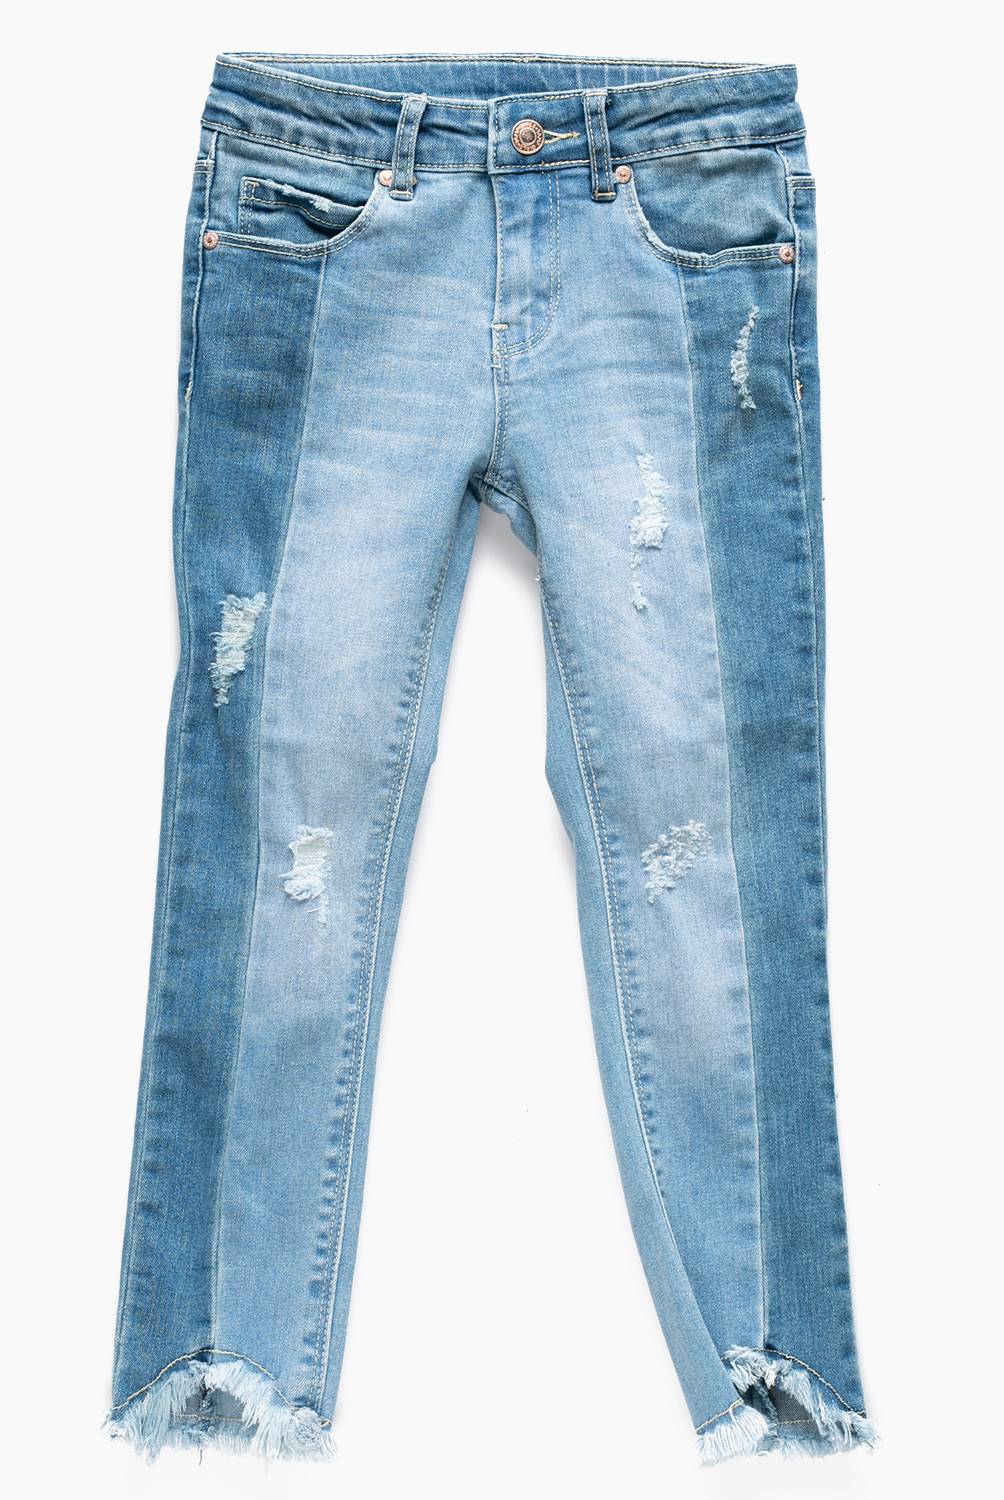 Yamp - Jeans Niña de Algodón